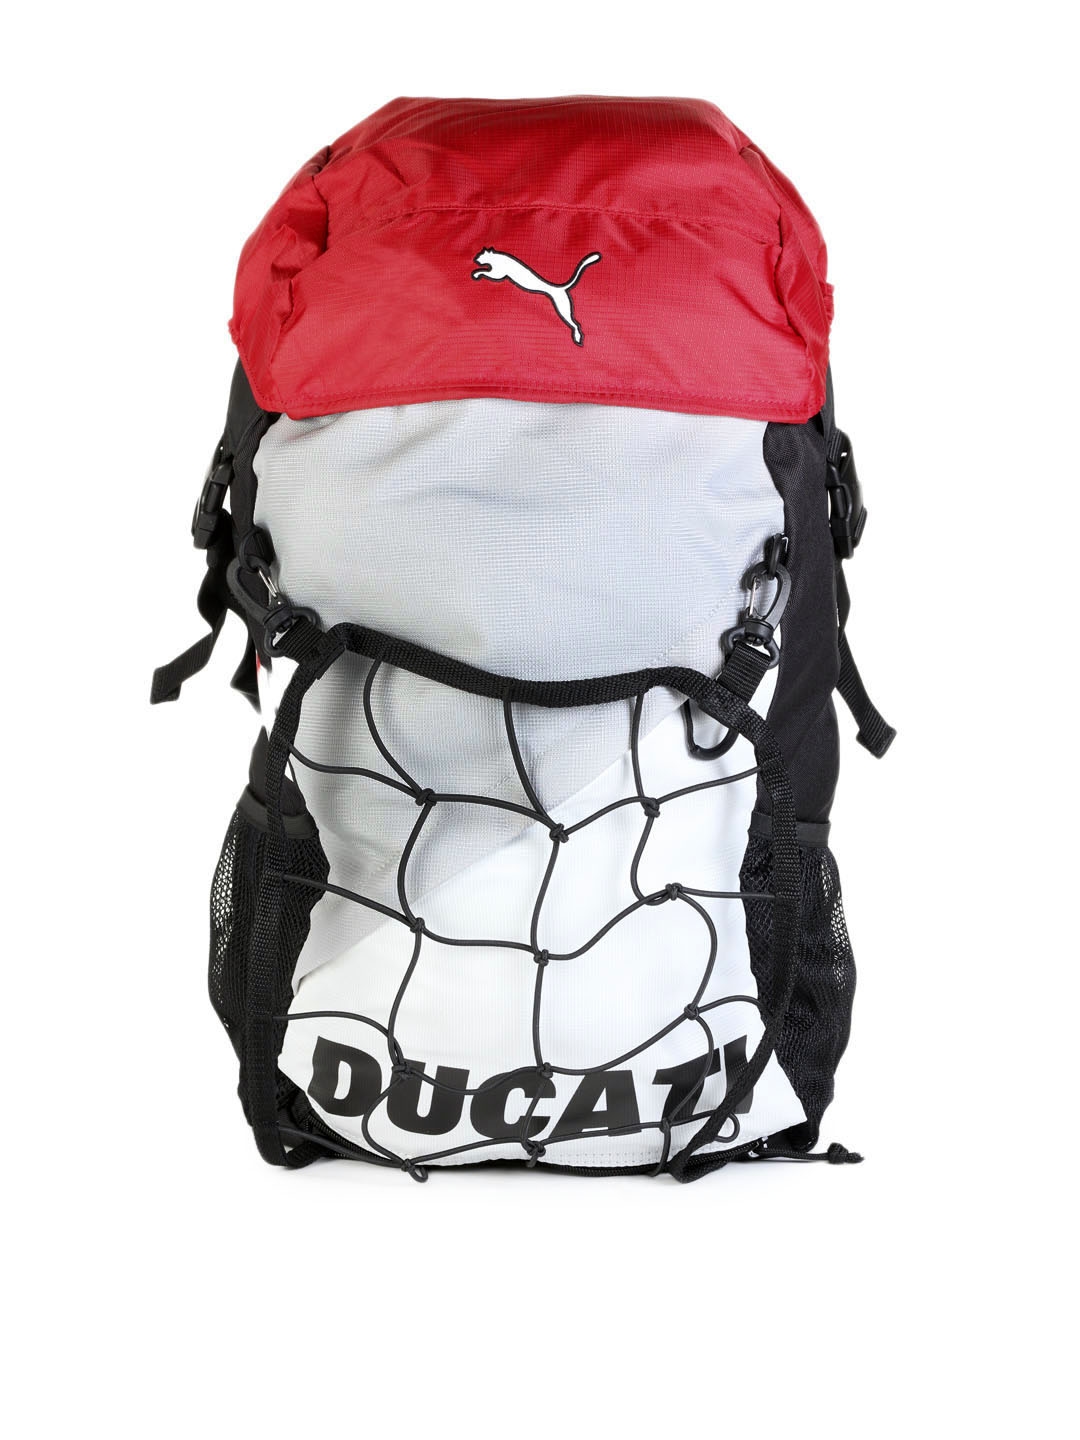 puma ducati backpack india